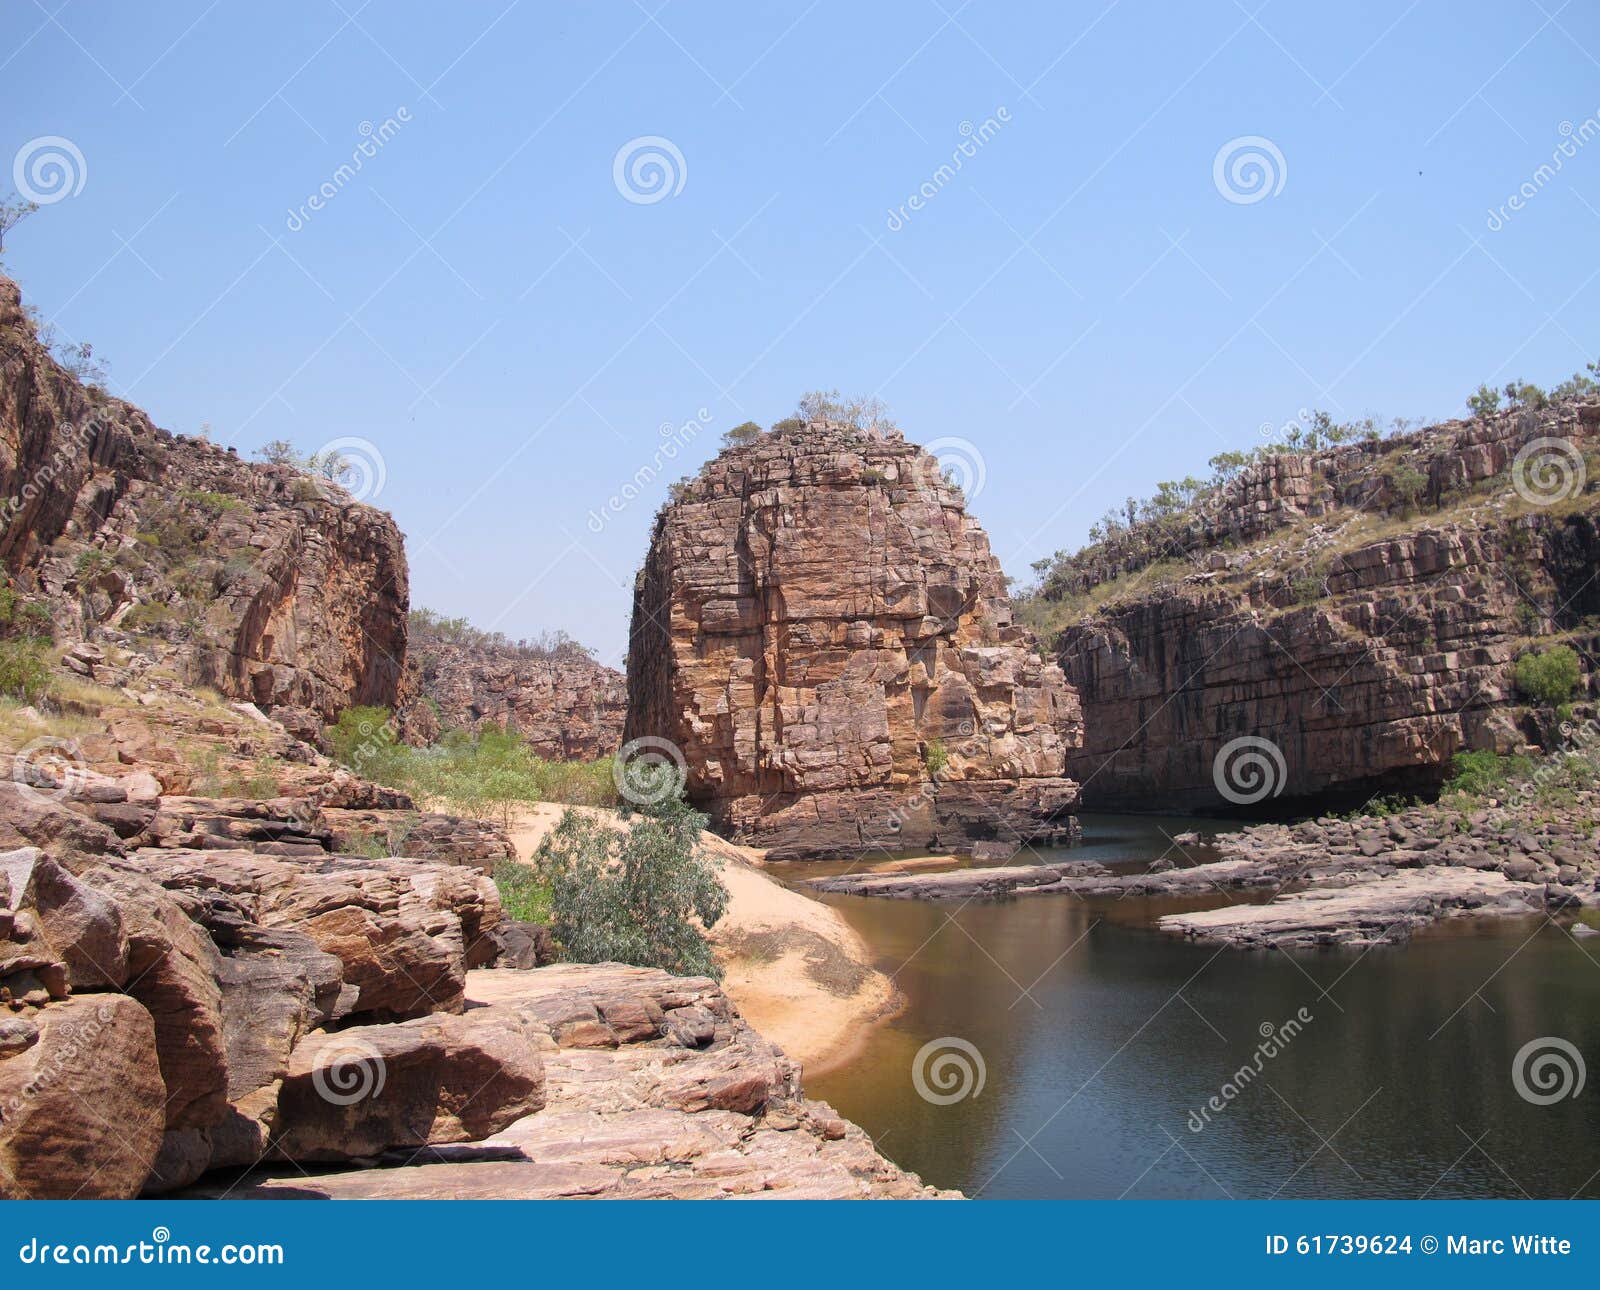 smith rock, nitmiluk national park, northern territory, australia